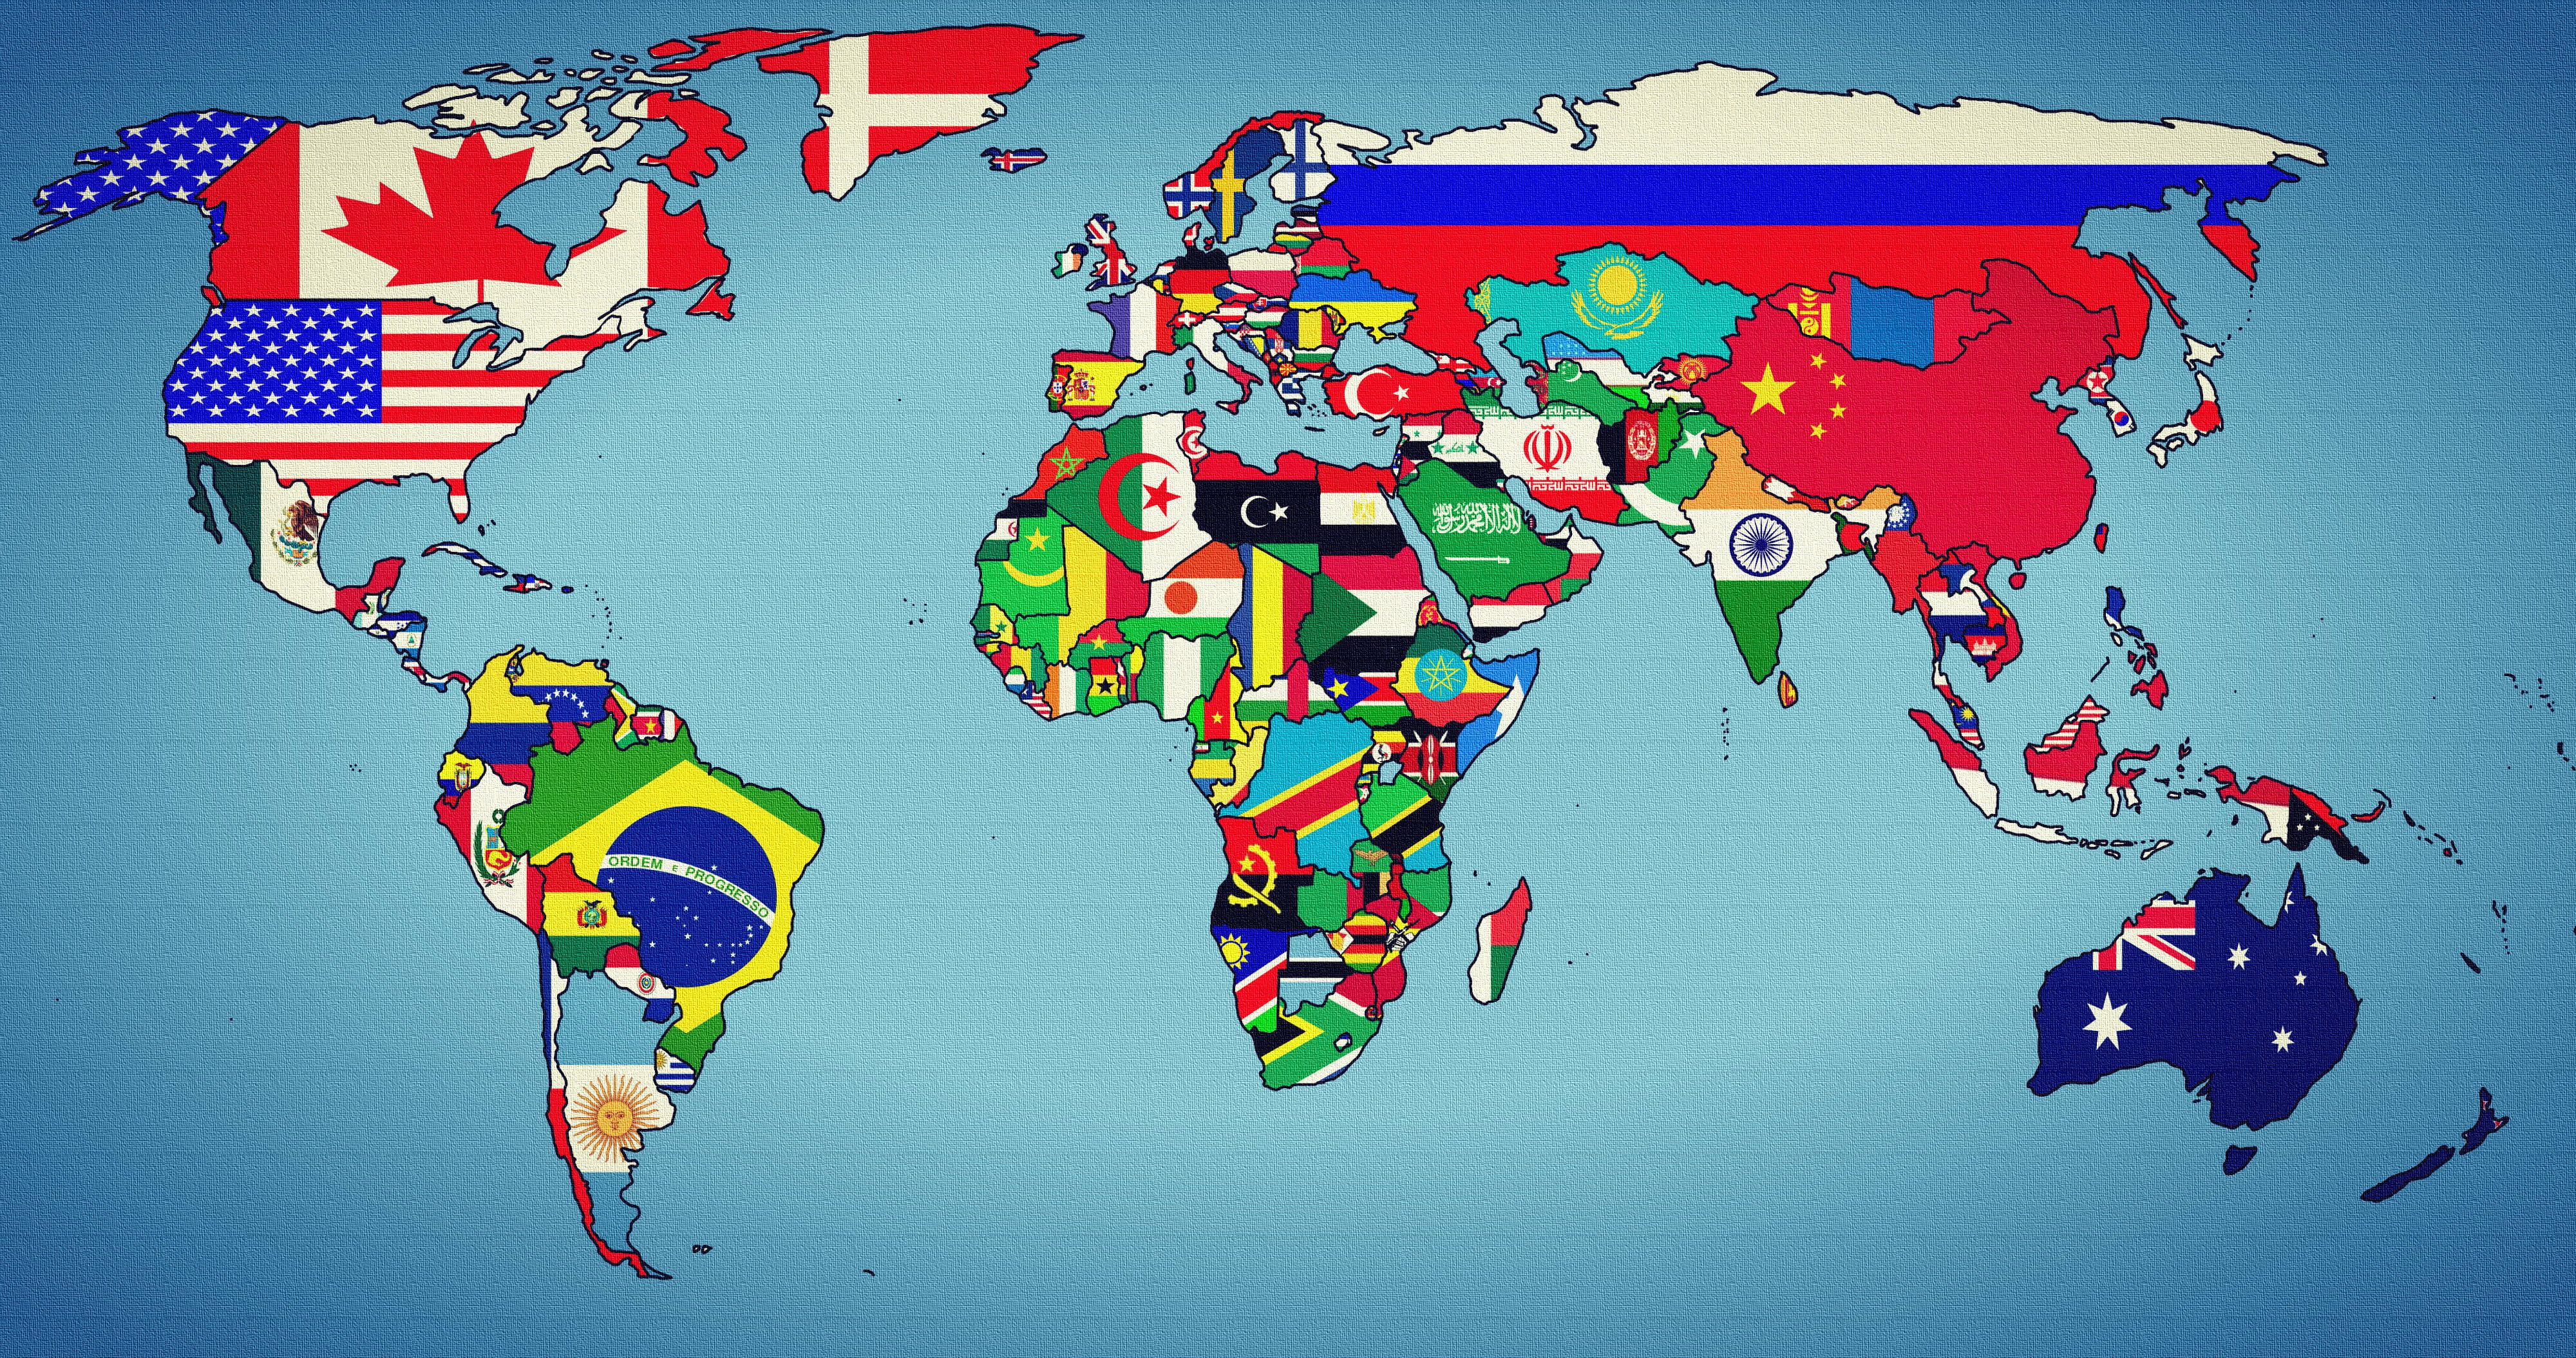 multicolored world map #world #earth #map #states geographic map K # wallpaper #hdwallpaper #desktop. World map painting, World map wallpaper, Europe wallpaper